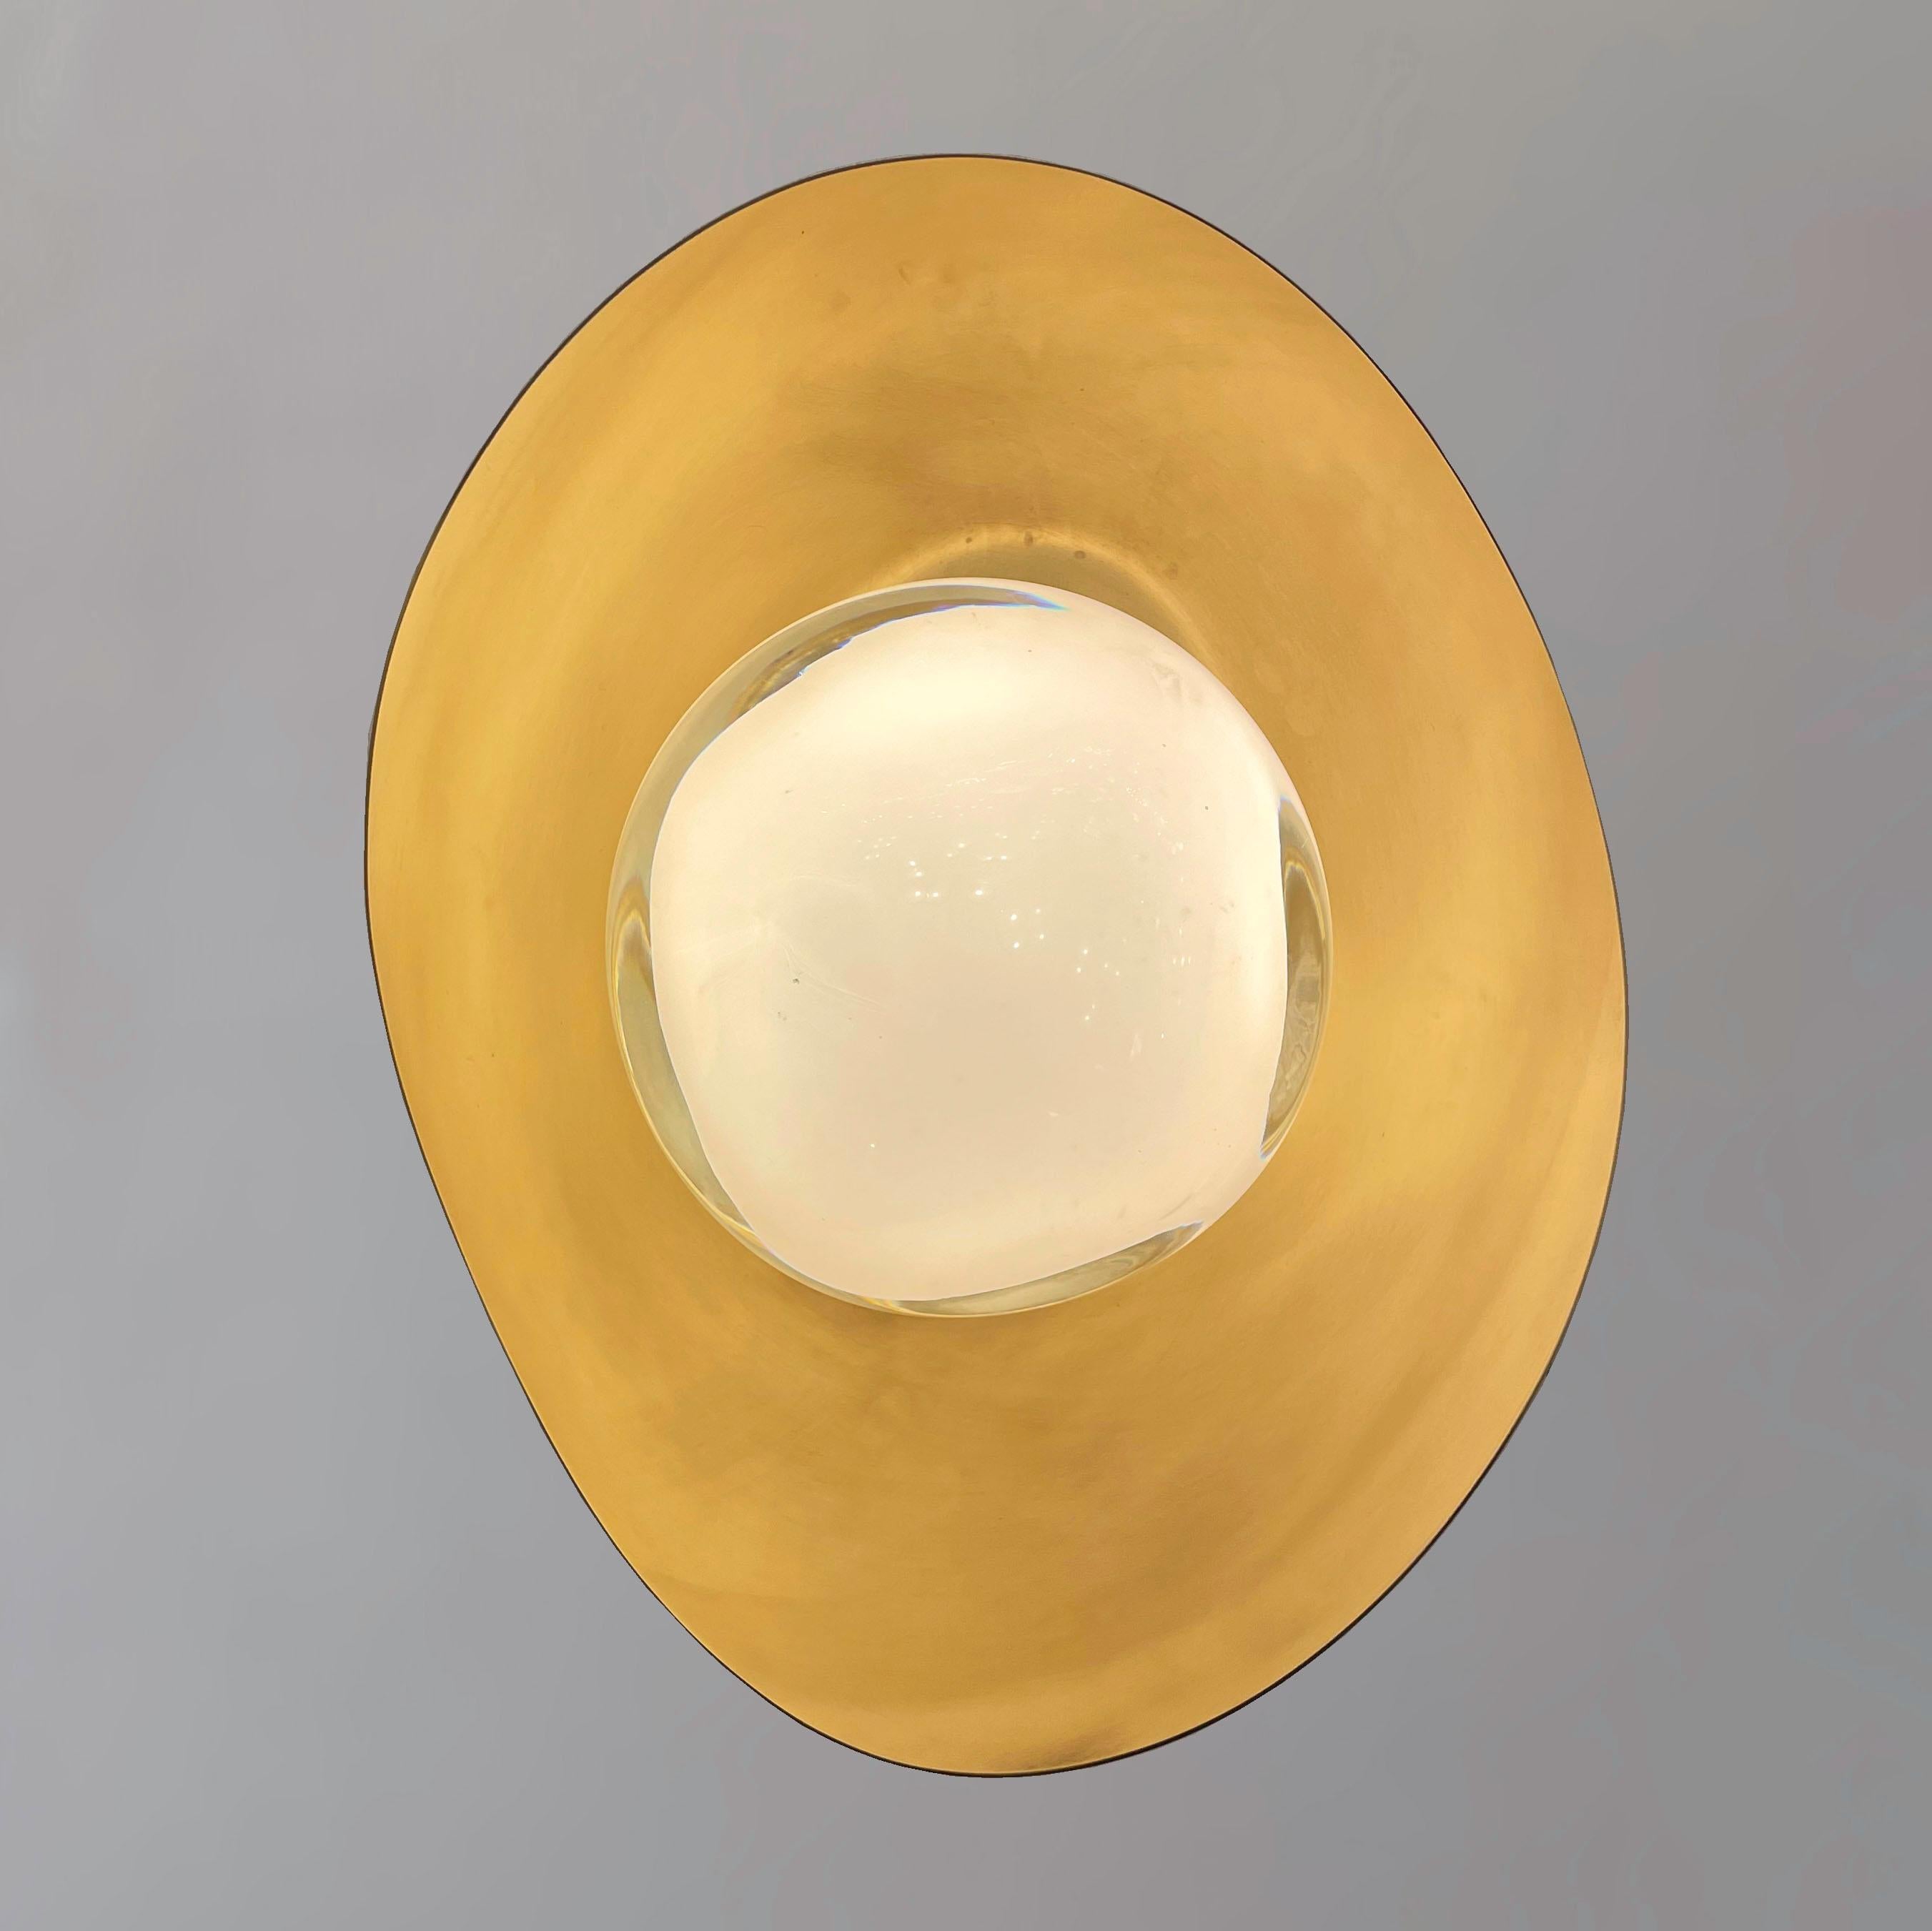 Perla Flushmount Ceiling Light by Gaspare Asaro-Satin Brass/Acqua Finish For Sale 2